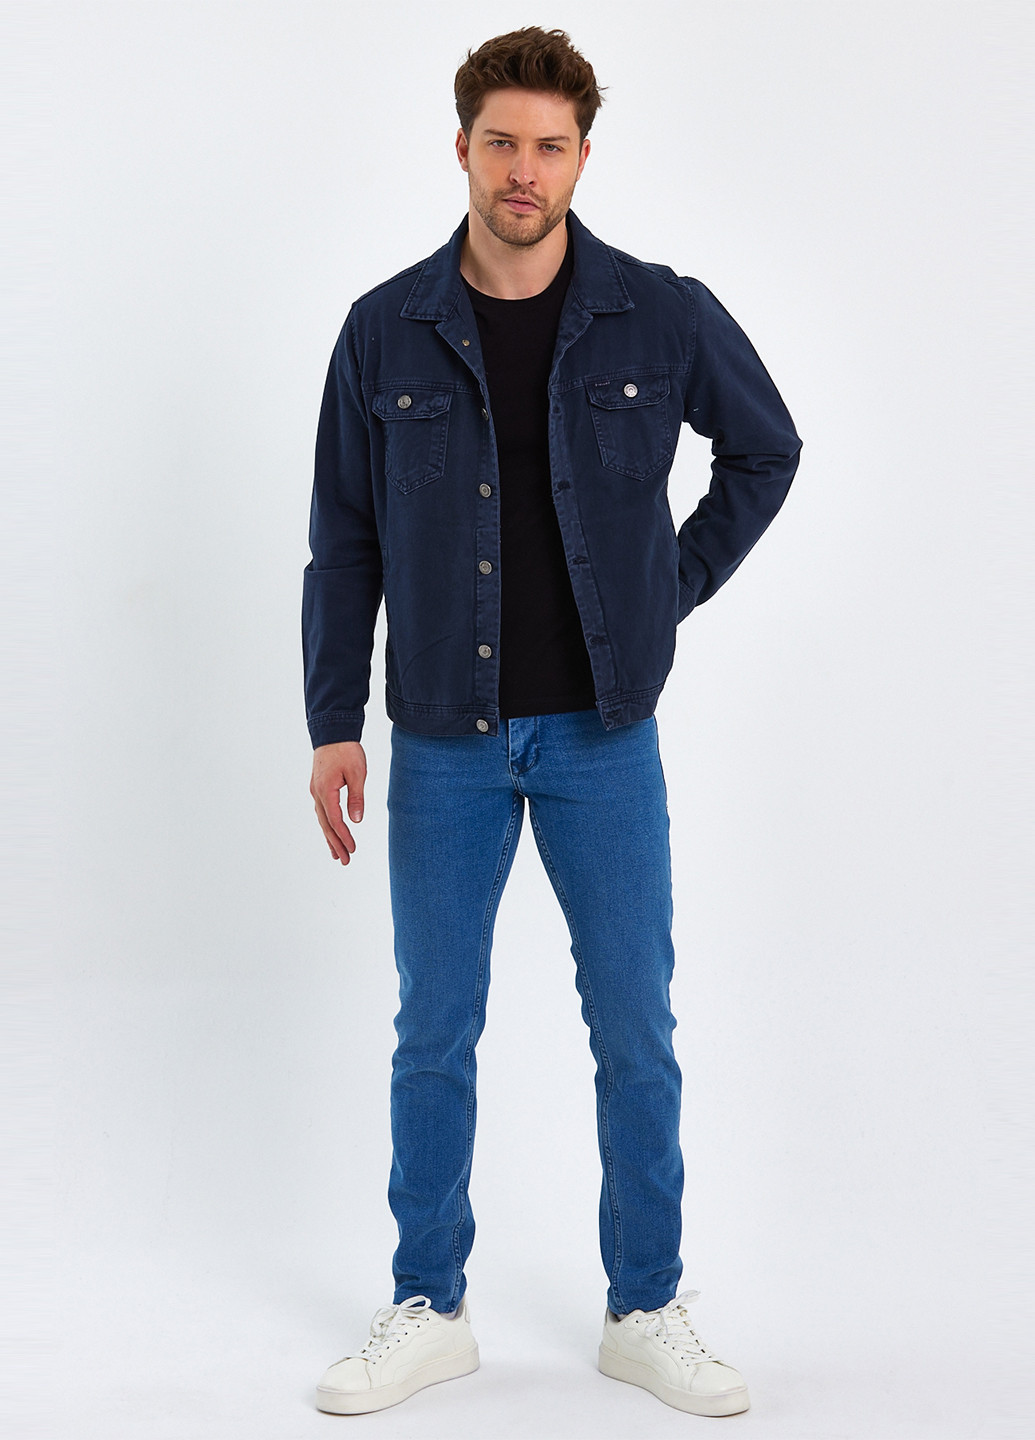 Сіро-синя демісезонна куртка Trend Collection